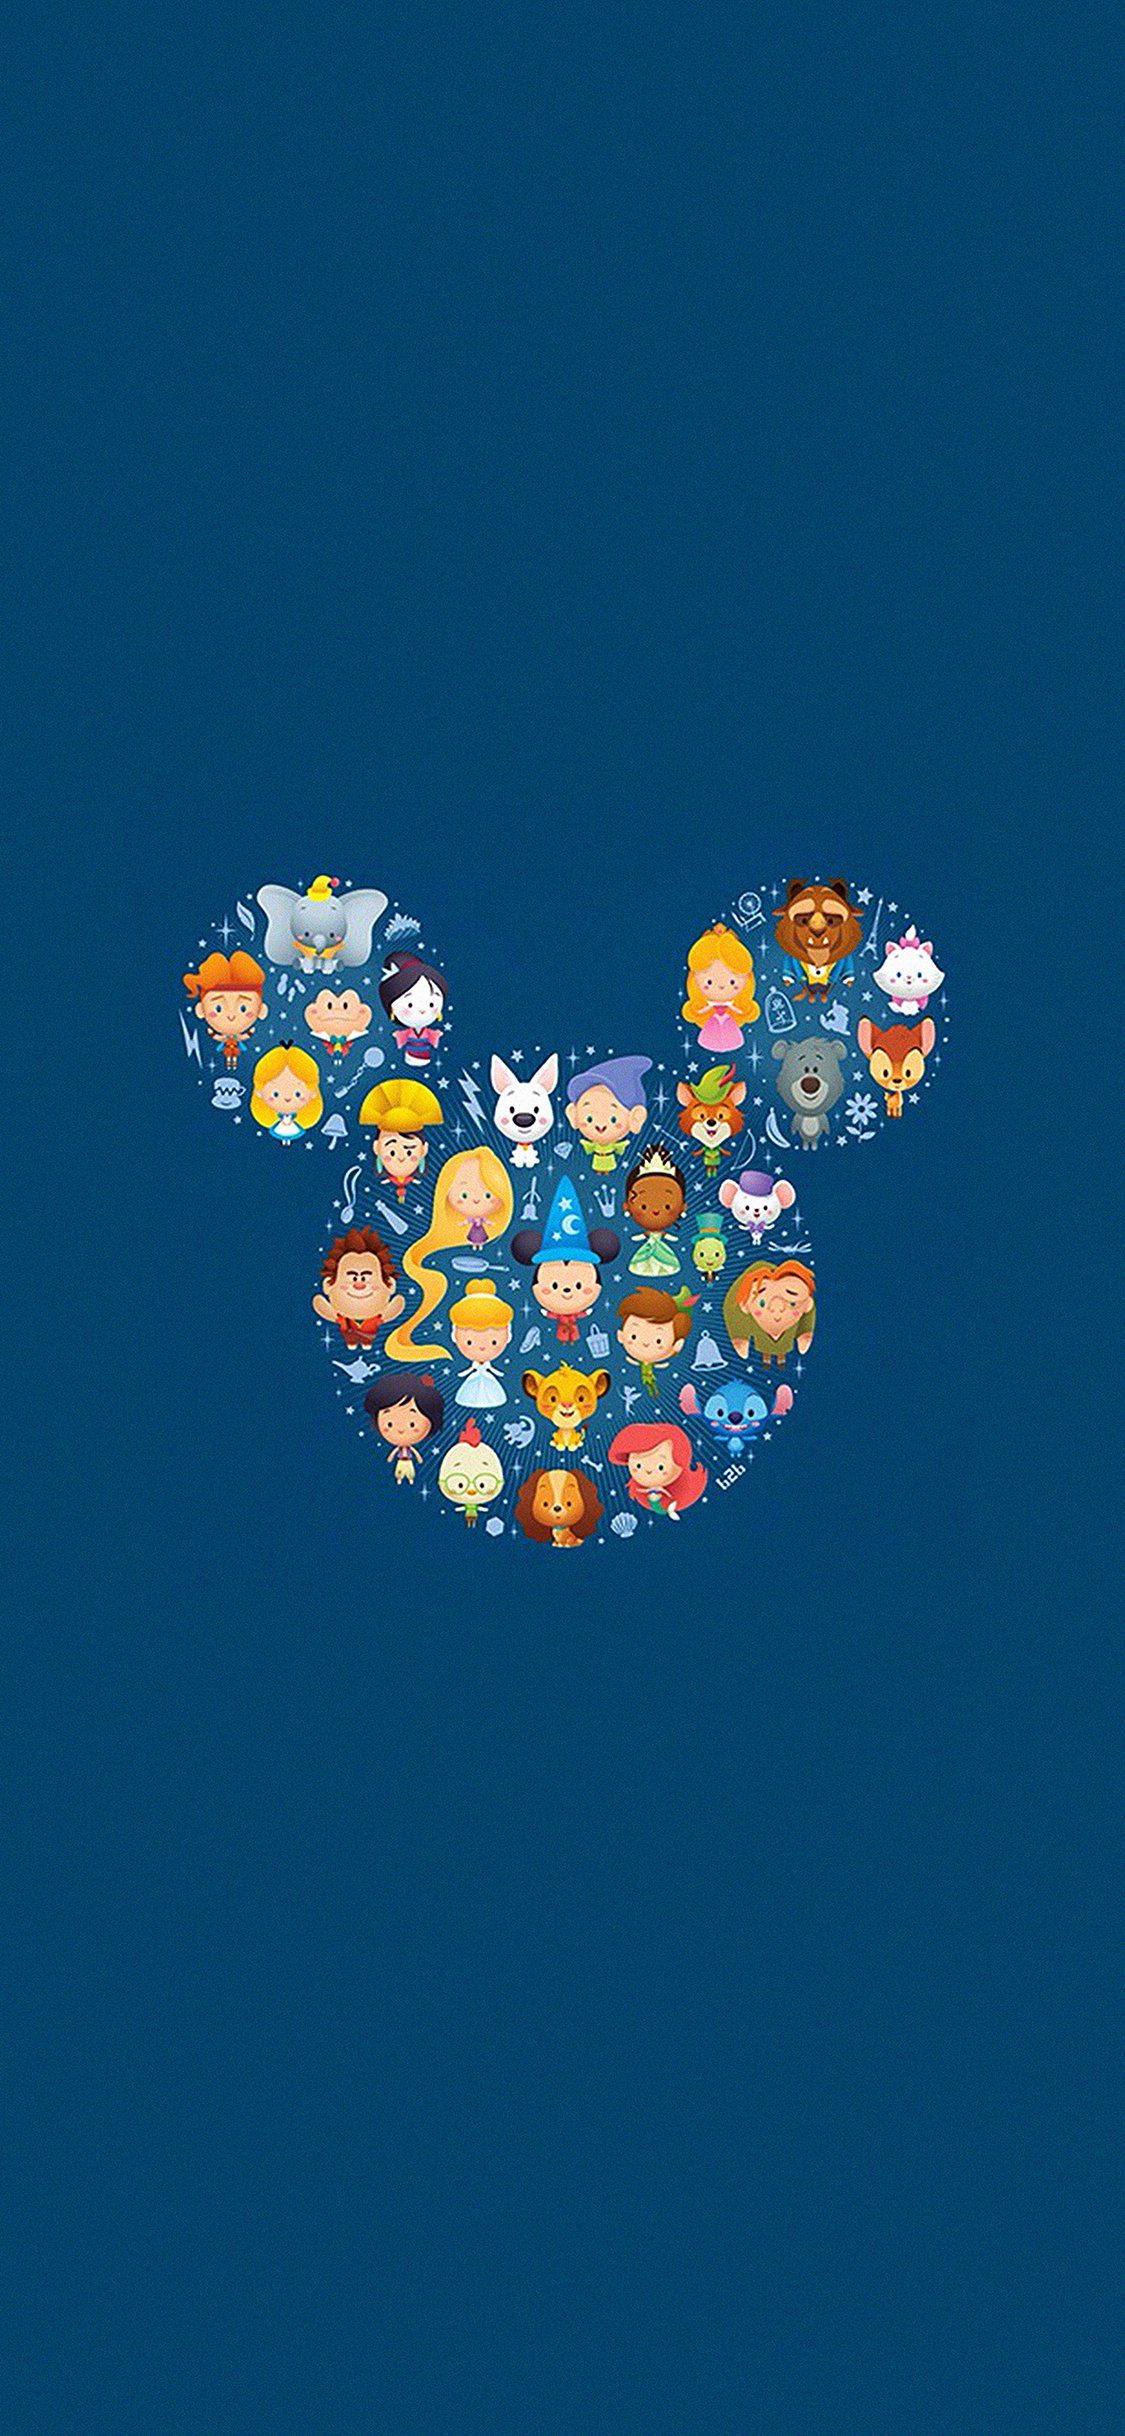 Disney art character cute iPhone X .ilikewallpaper.net